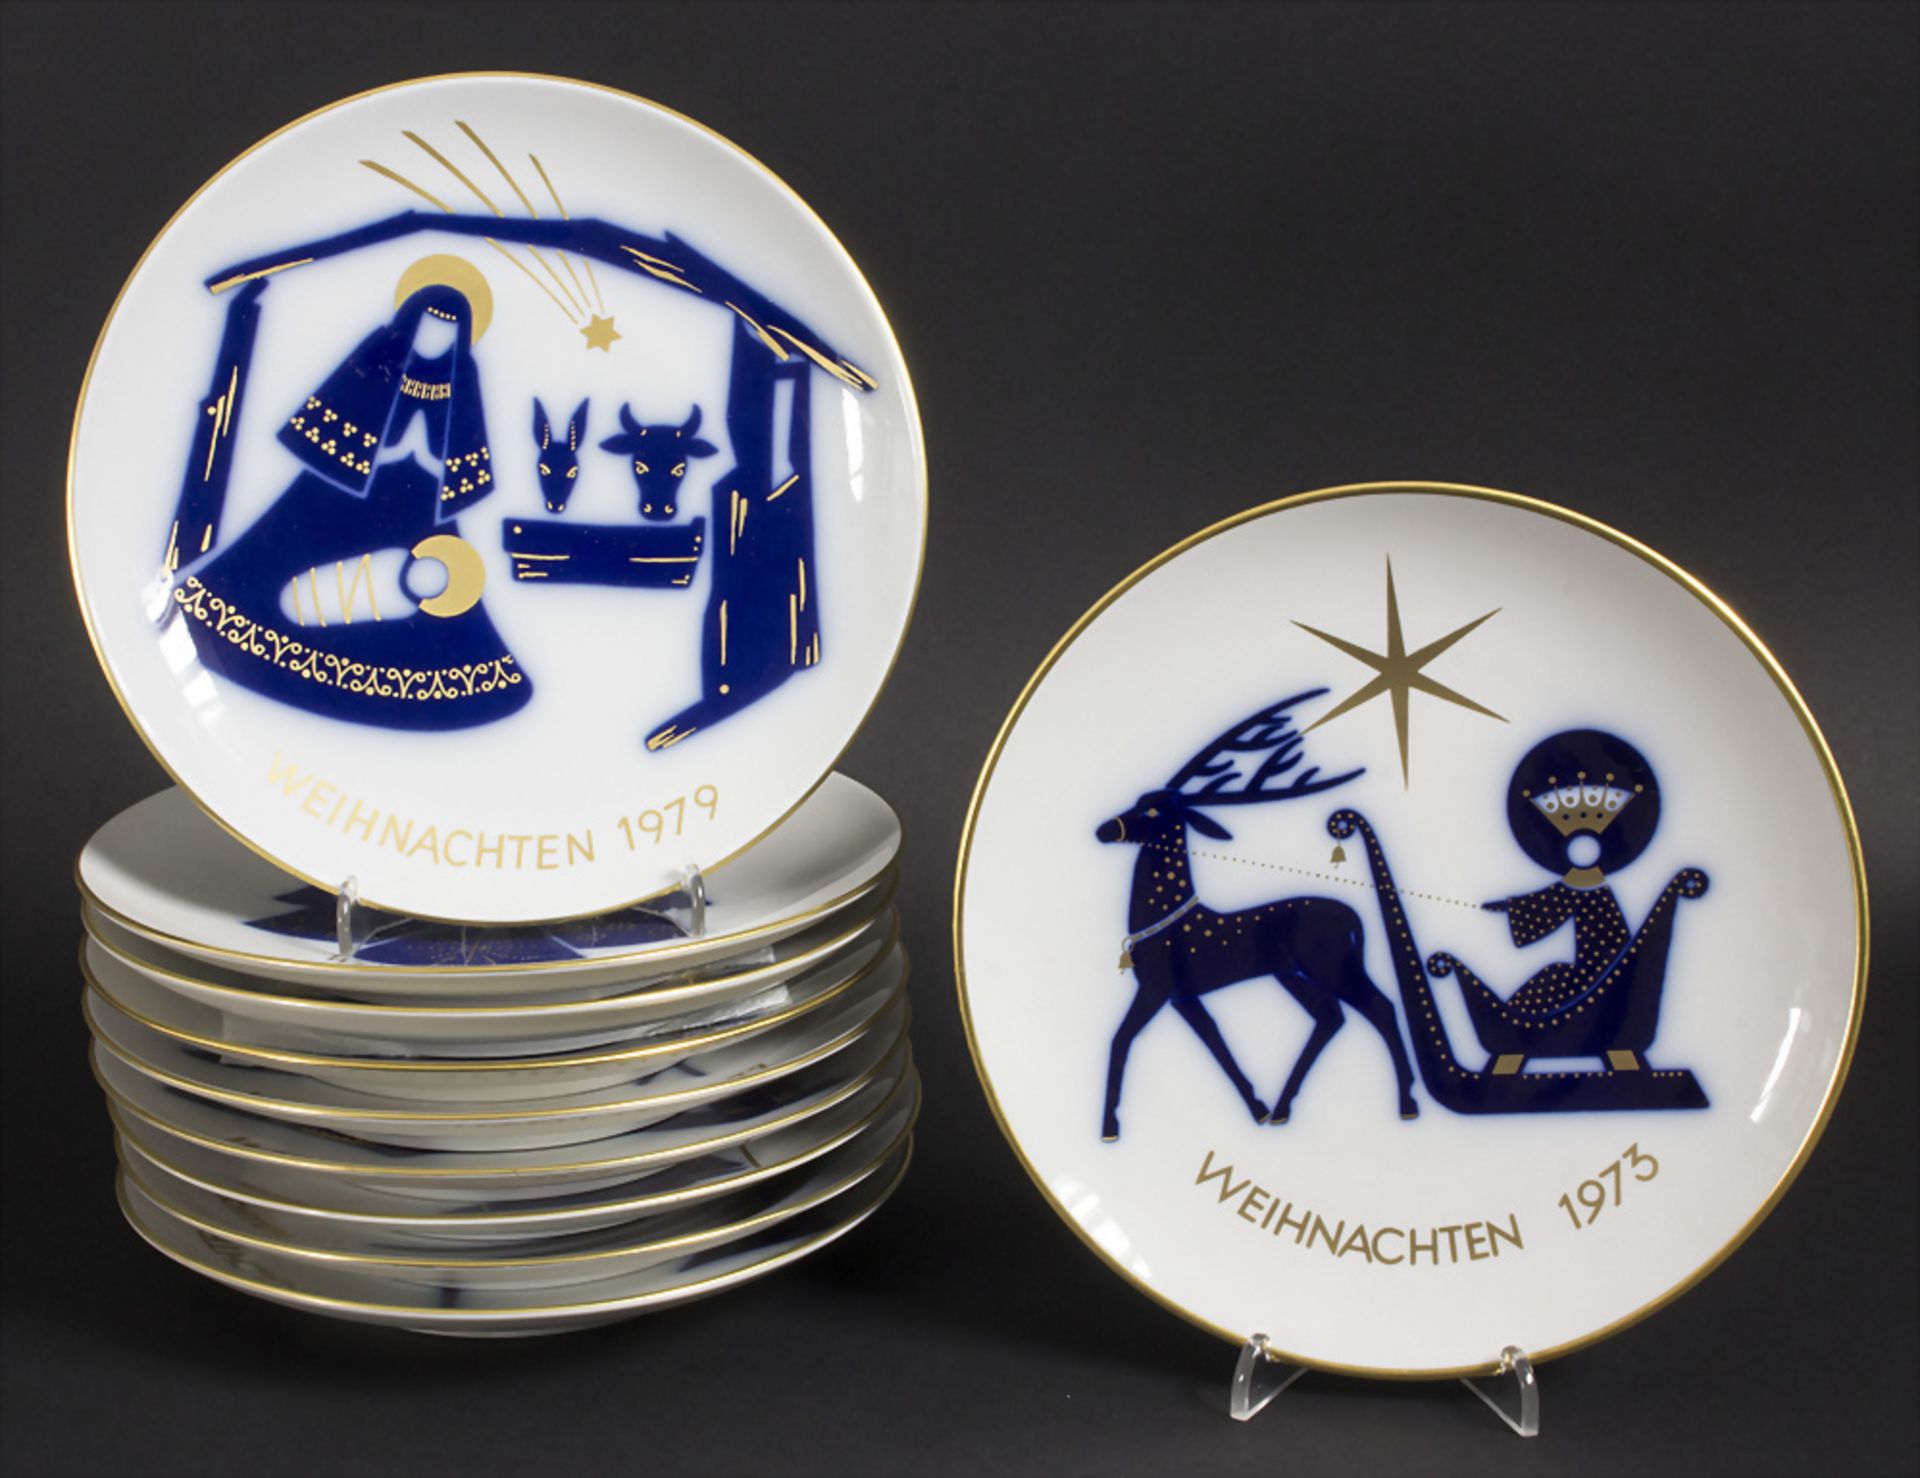 10 Weihnachtsteller / 10 Christmas plates, limited edition, KPM, Berlin, 1970-1979